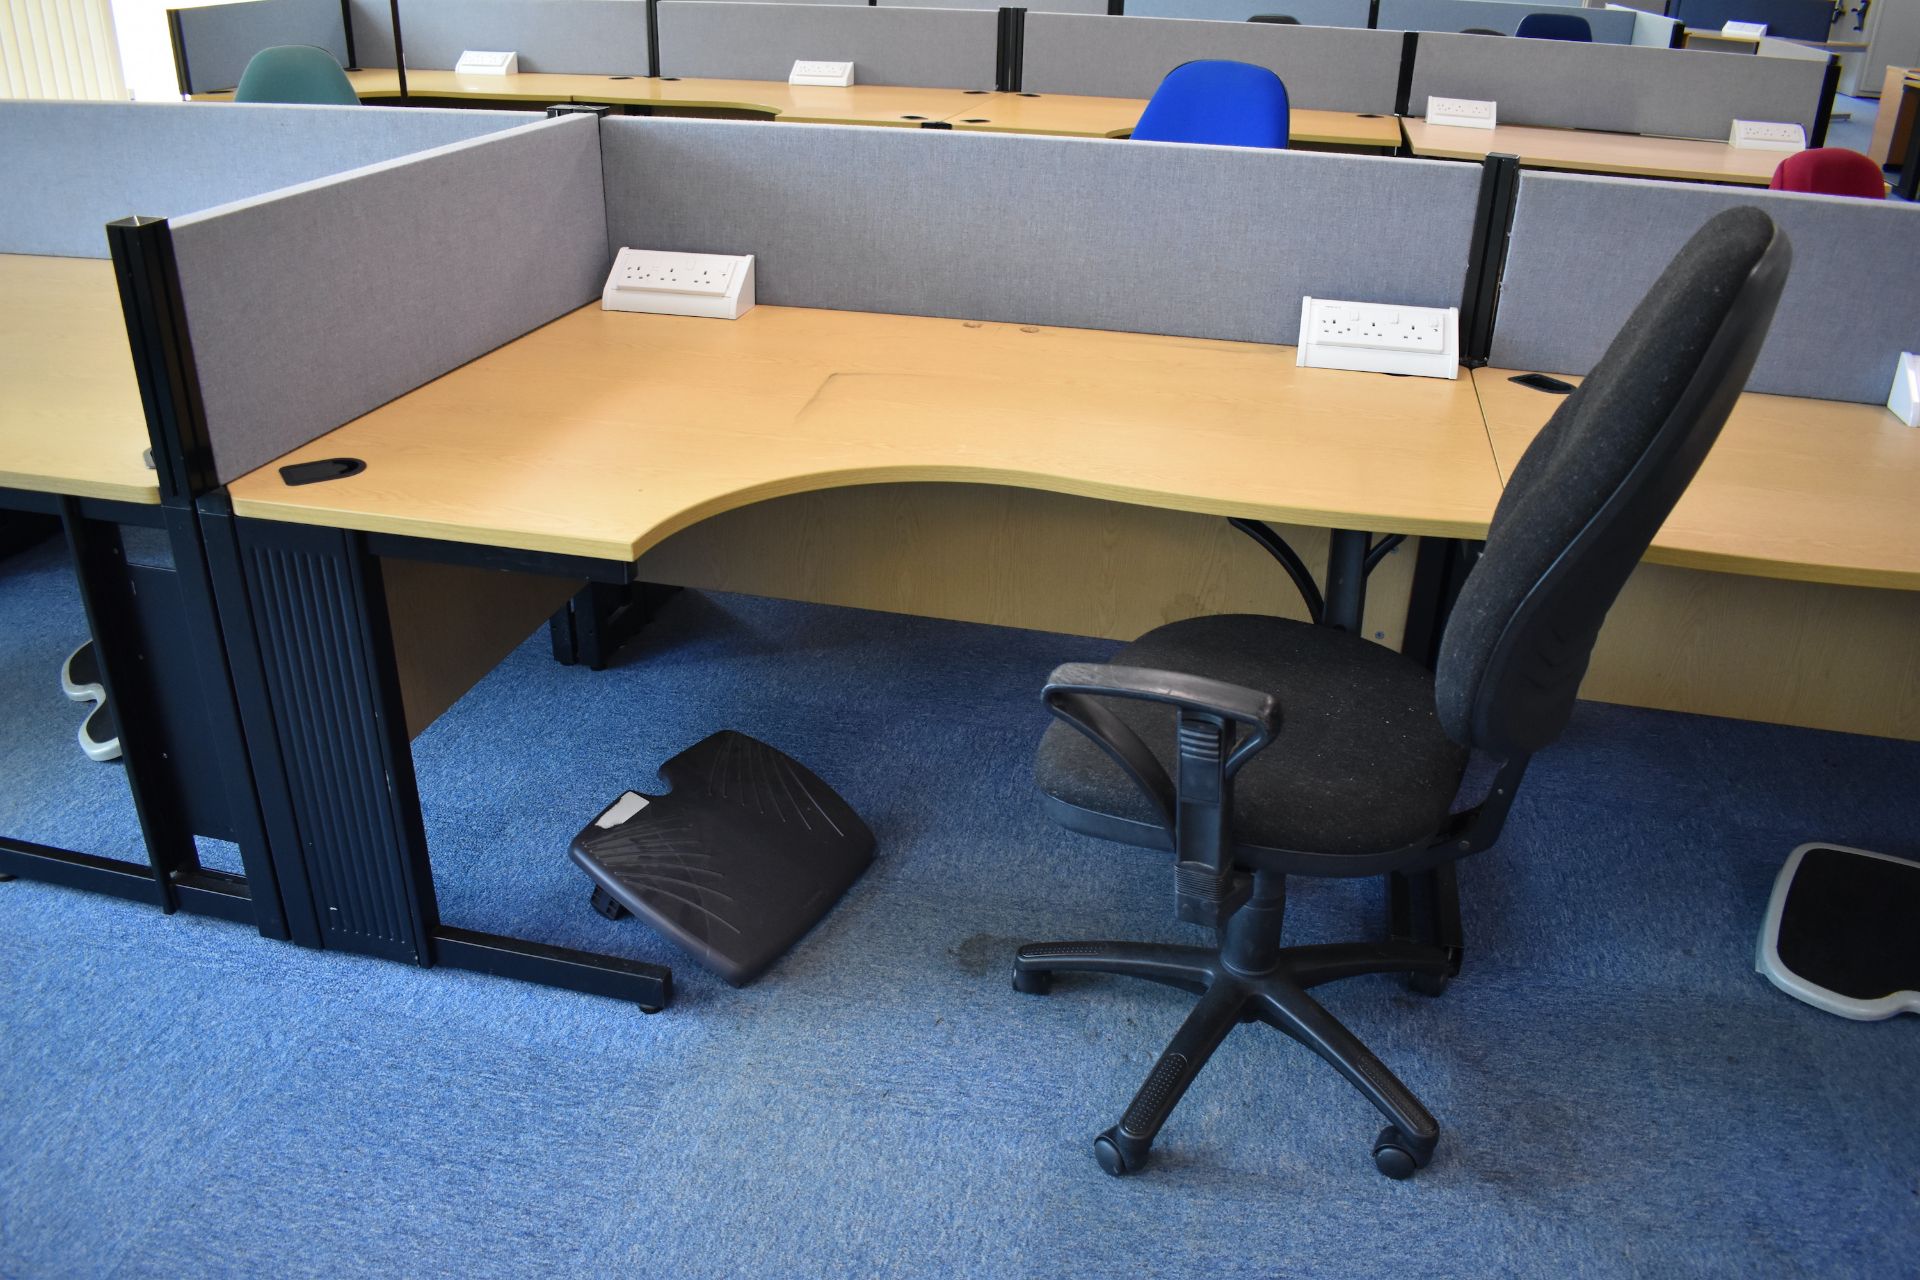 Hard Wired Corner Desks, Desk Screens, Chairs, Footrest, Coat Stand - Image 6 of 17